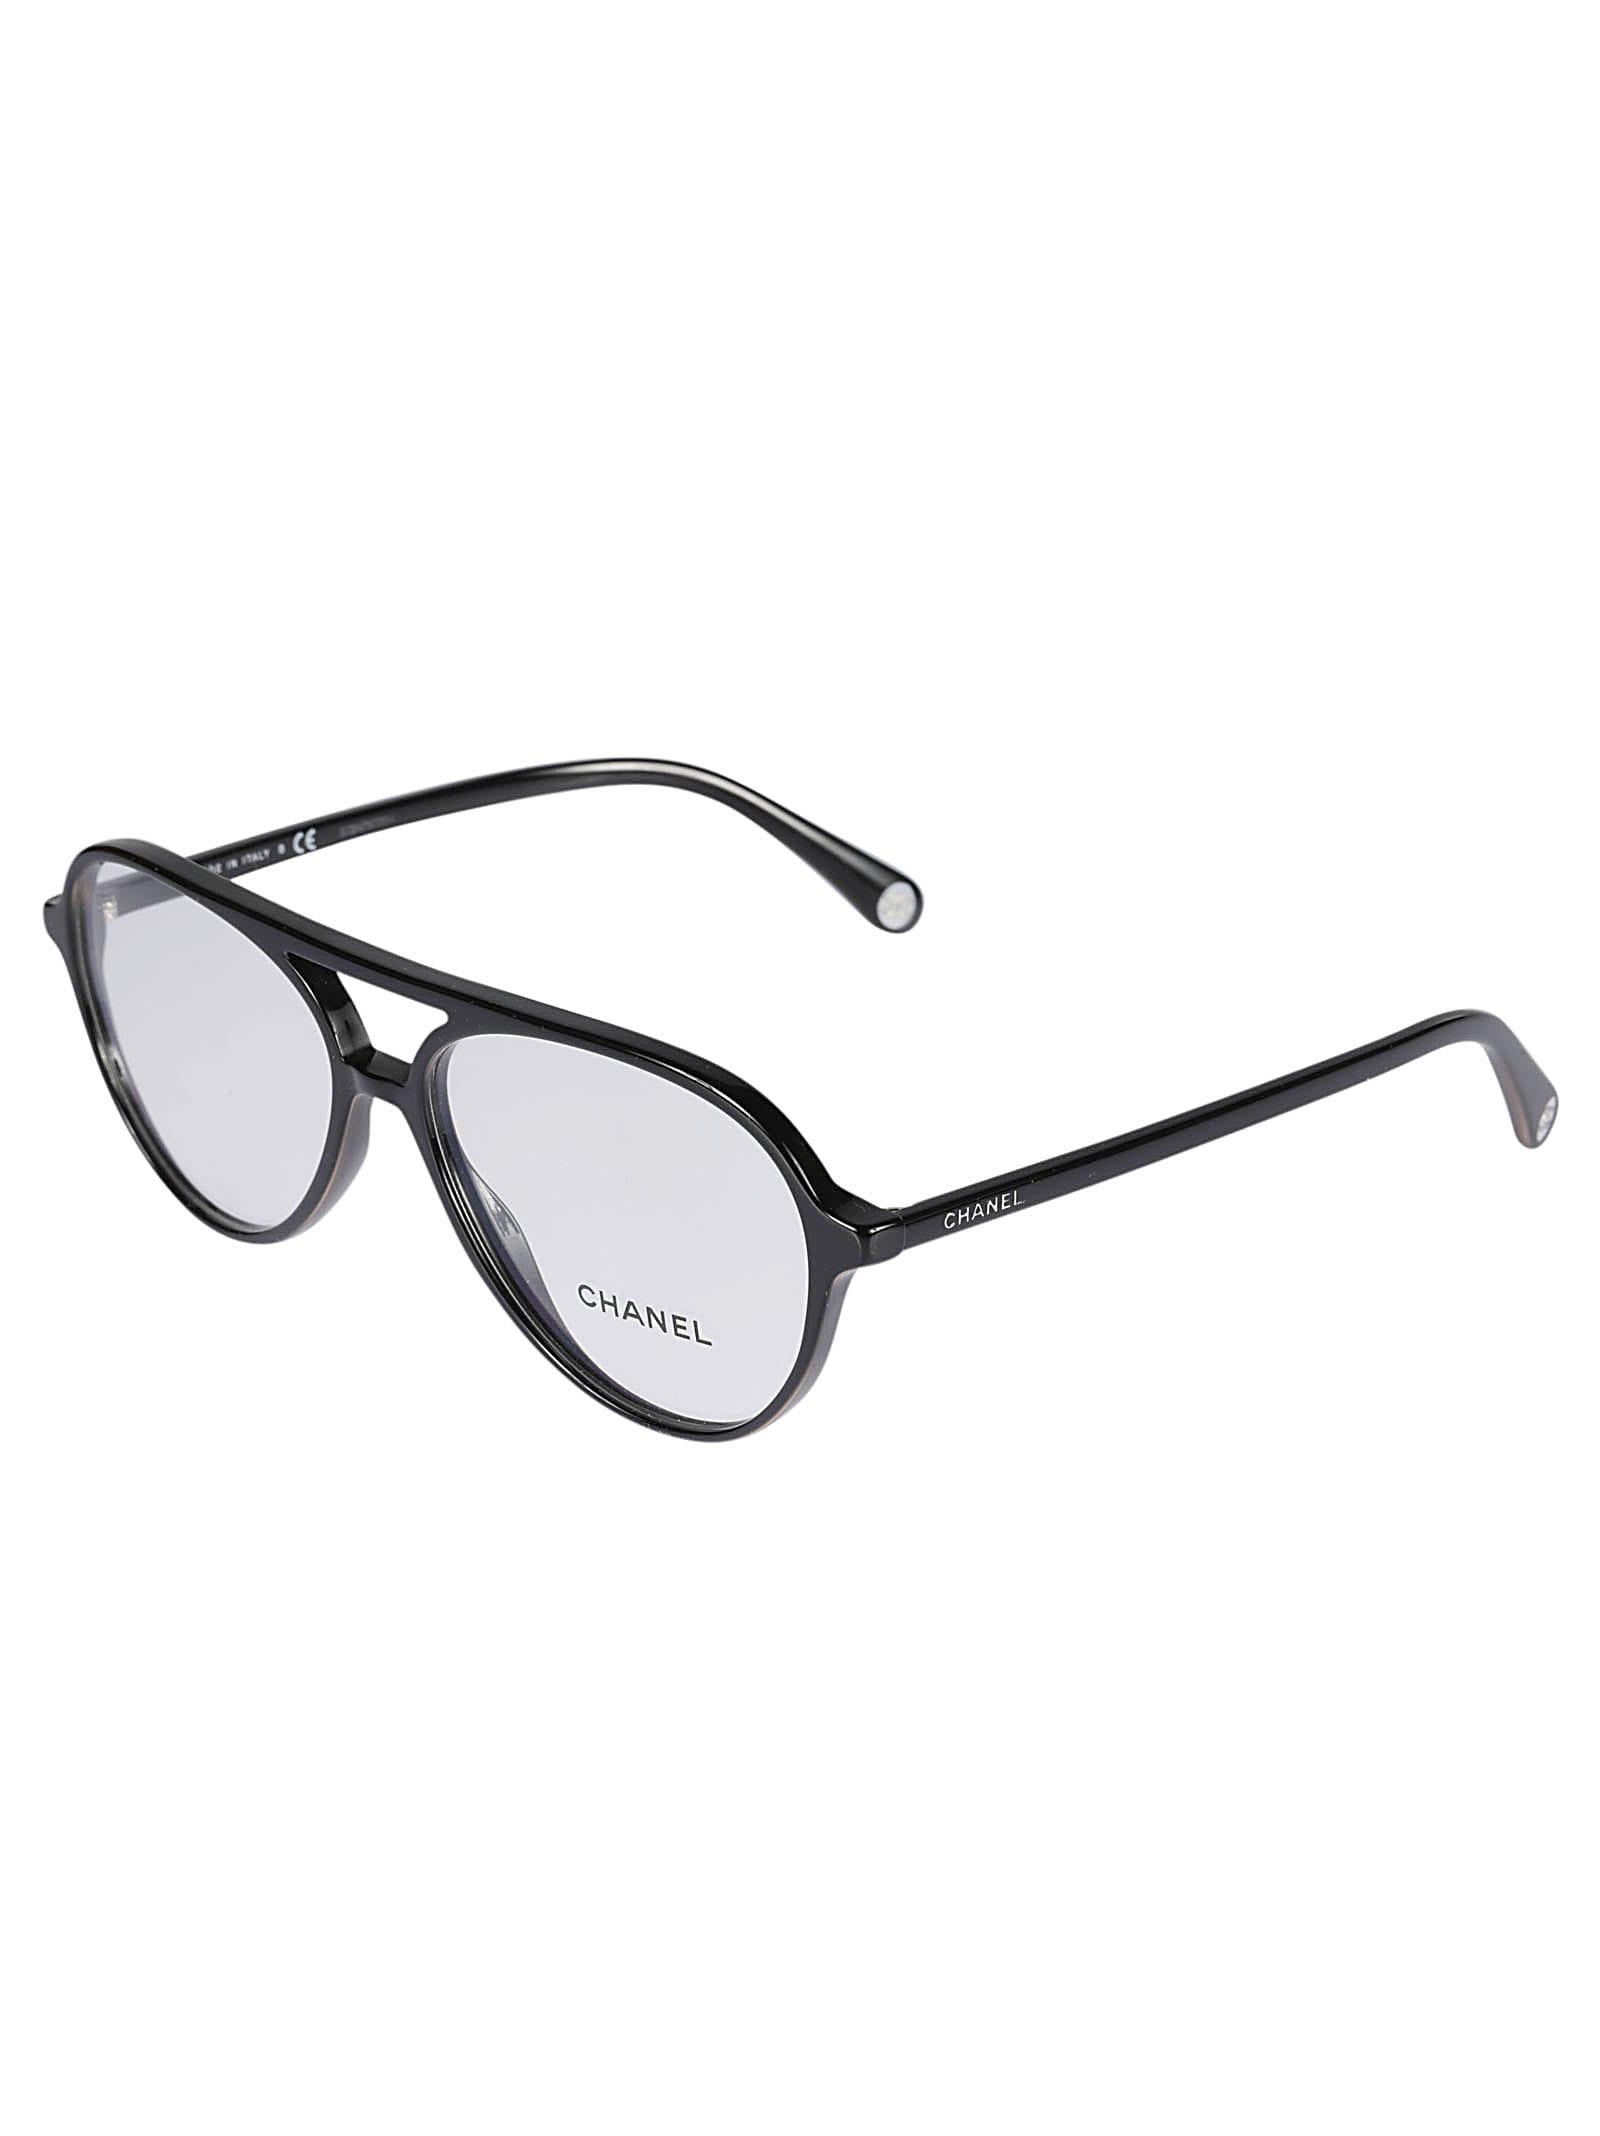 Chanel Pilot Eyeglasses  Chanel eyewear, Fashion sunglasses, Eyewear